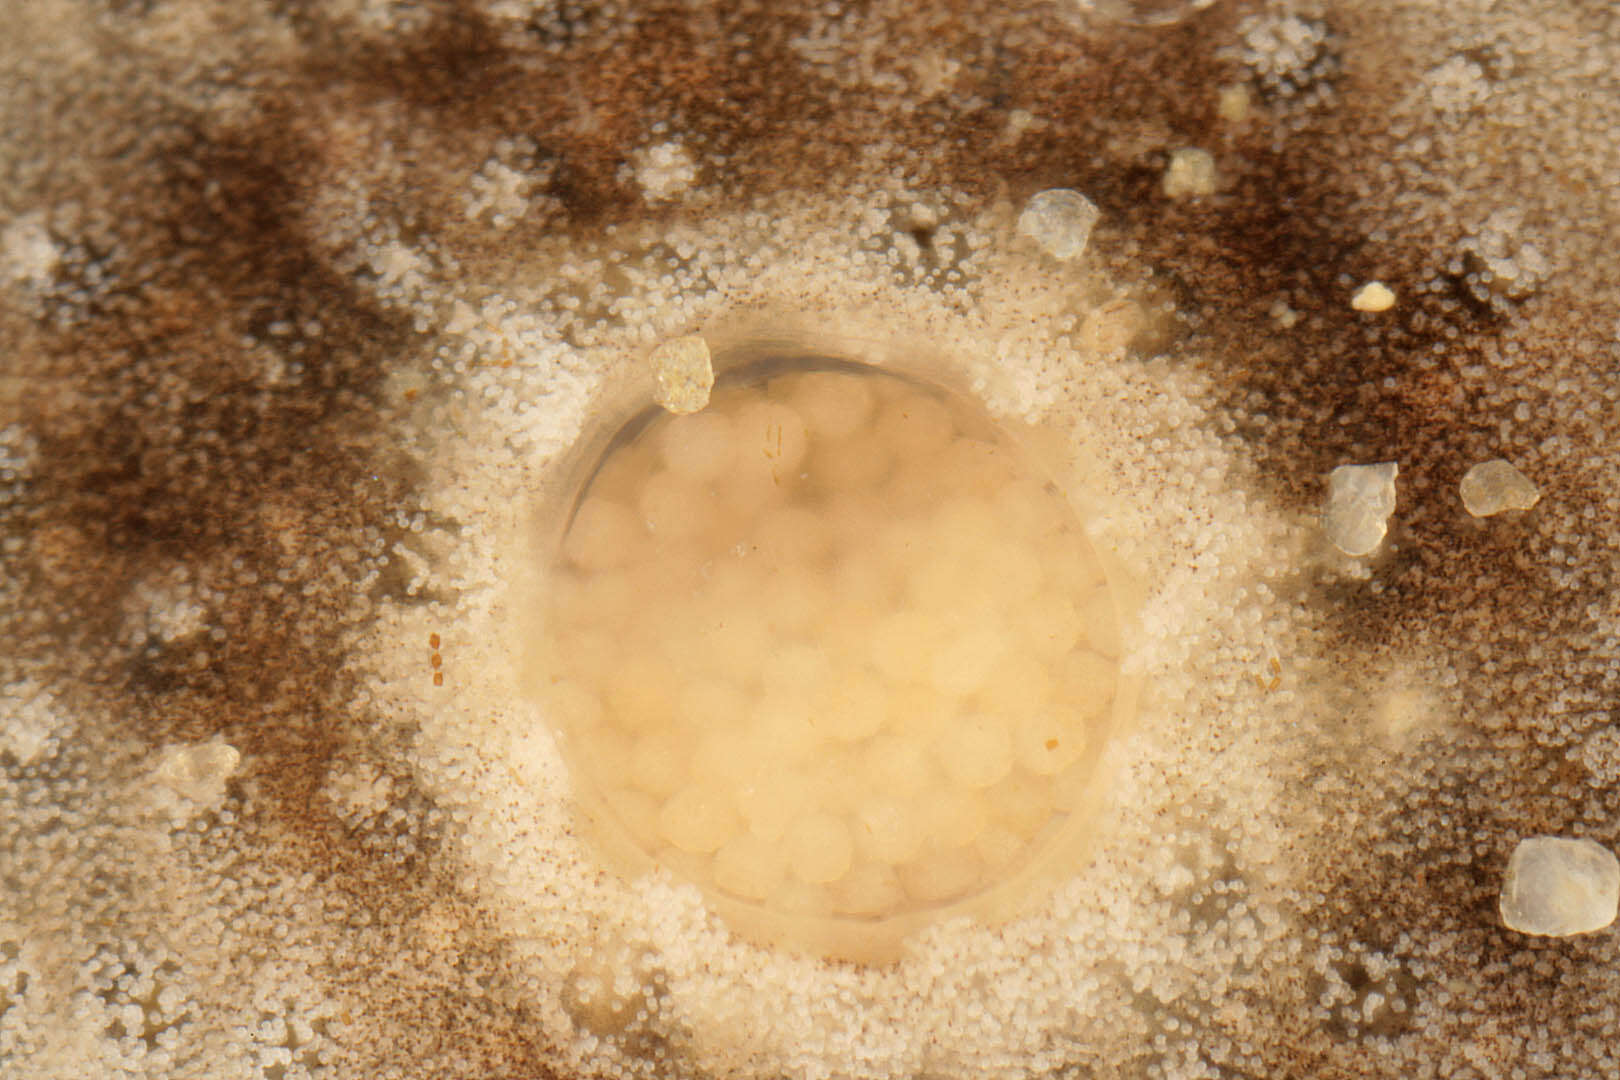 Didemnum maculosum (Milne Edwards 1841) resmi